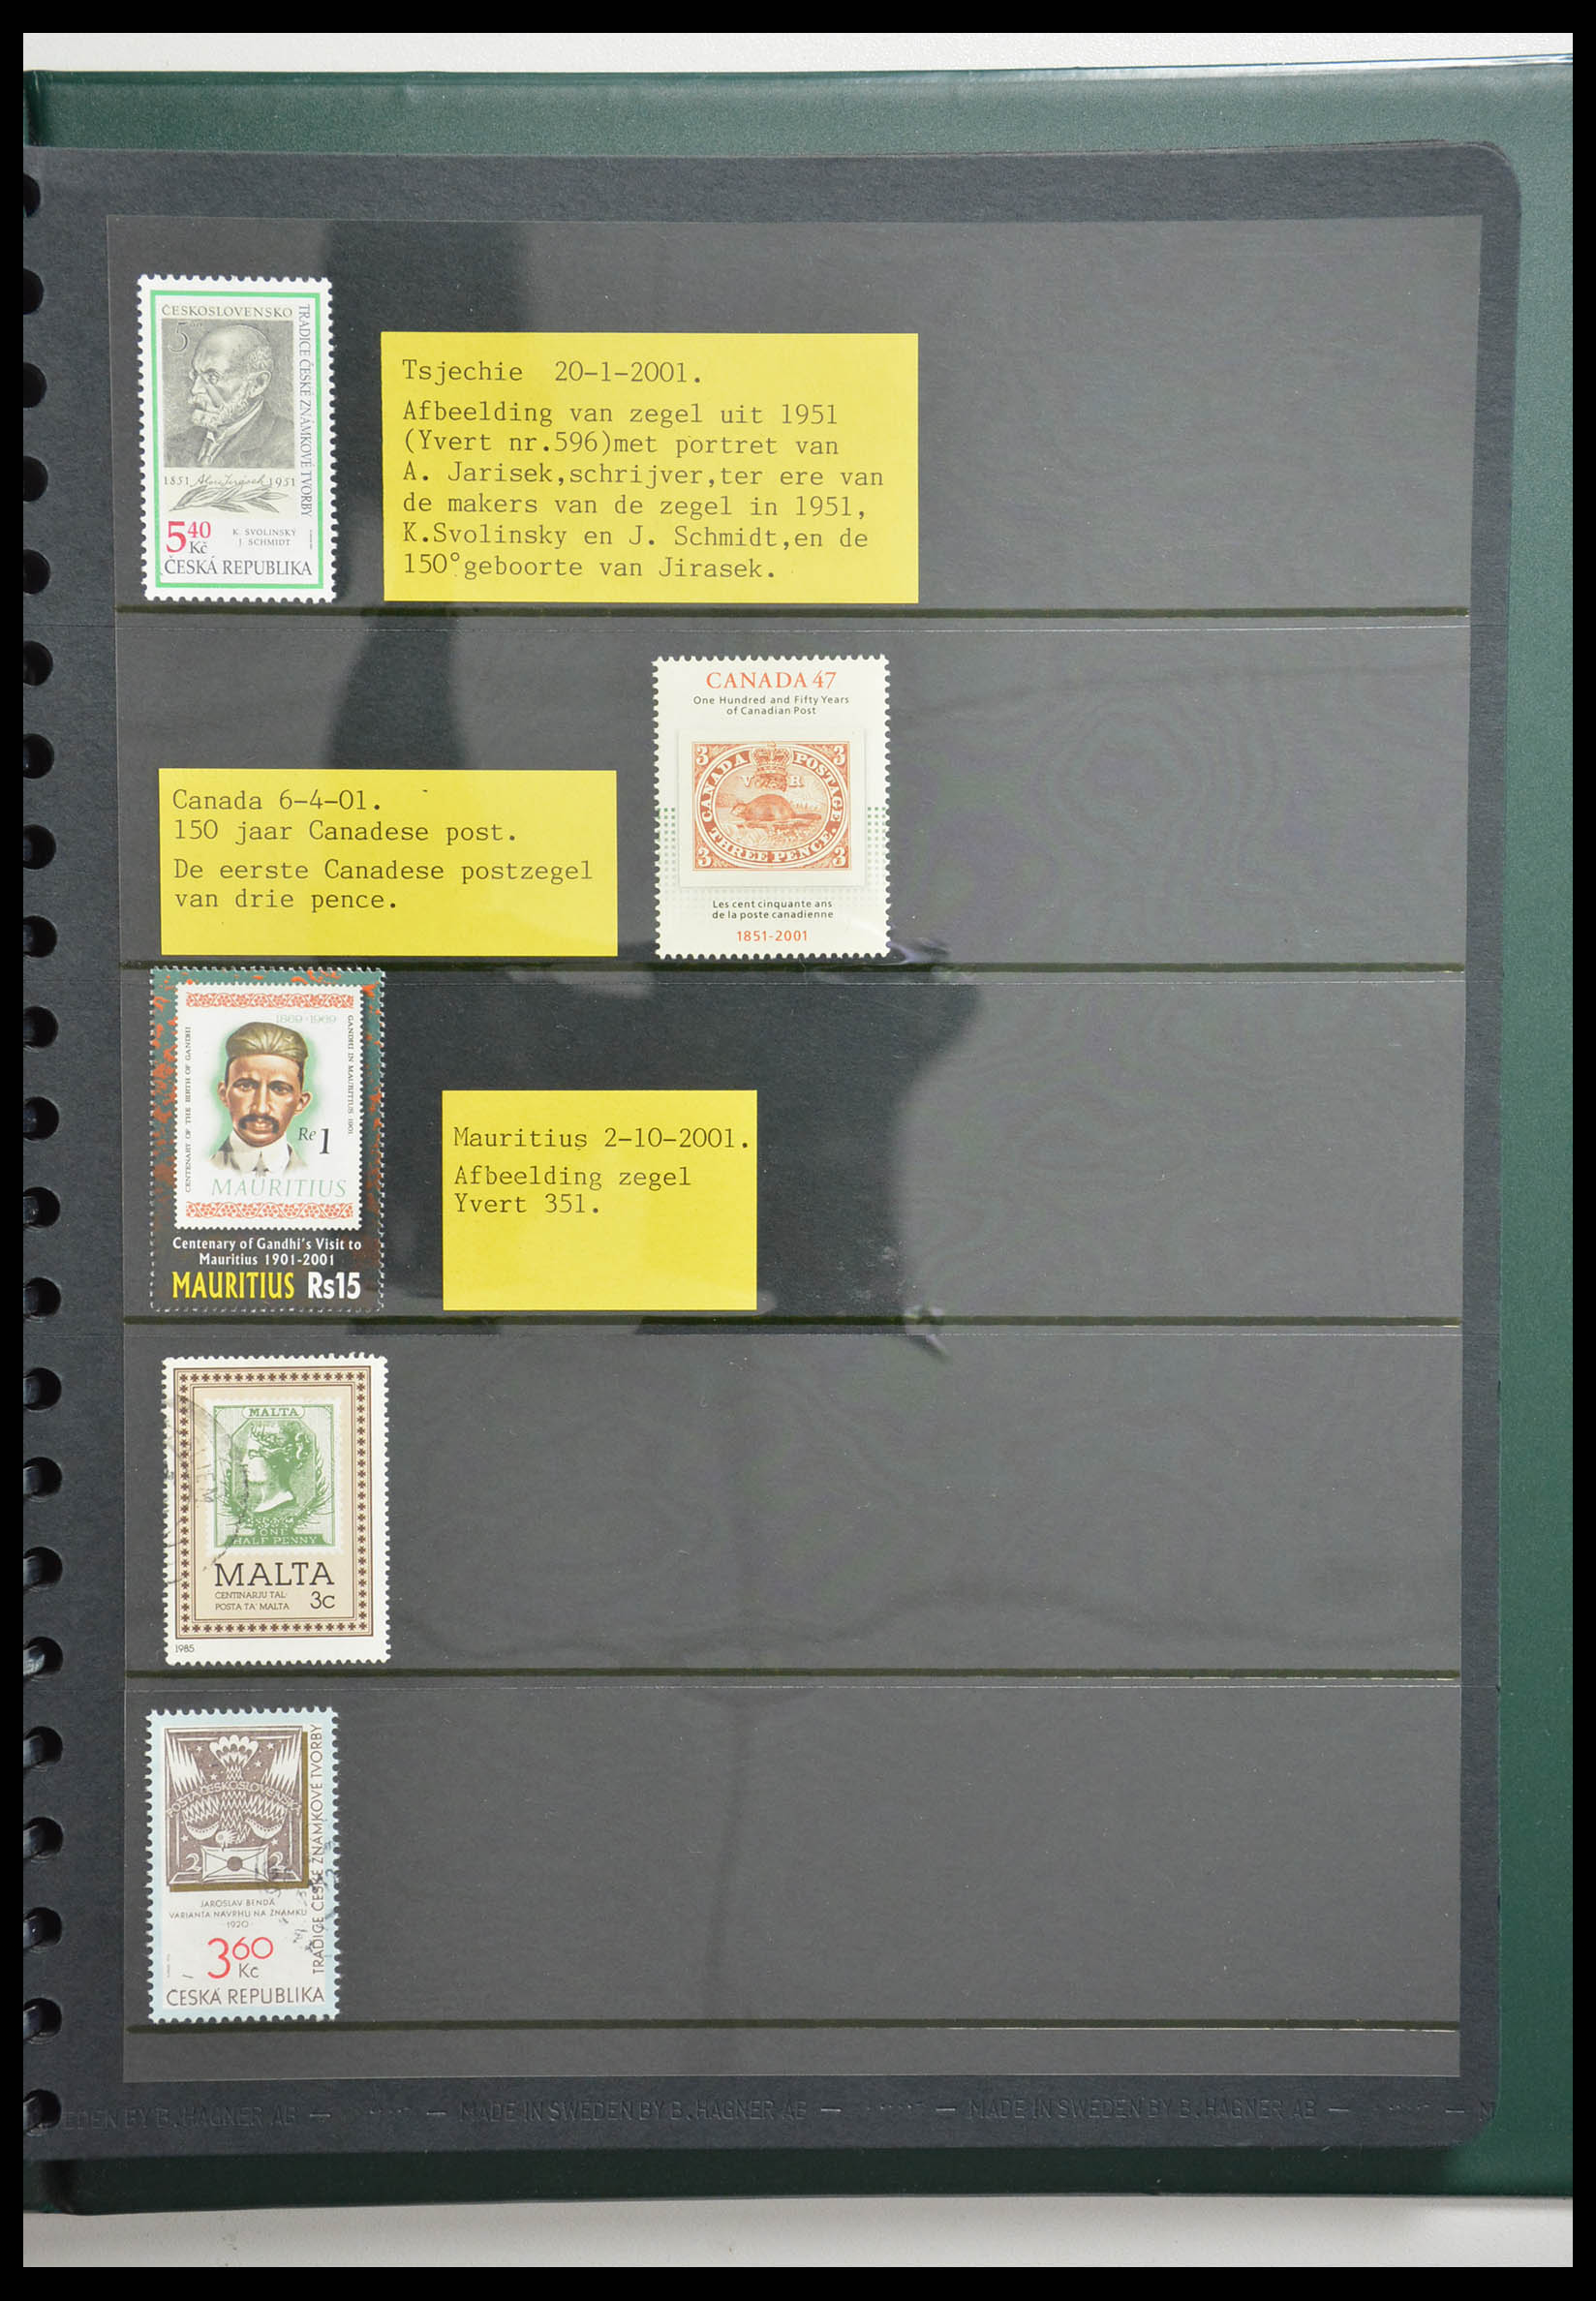 28337 070 - 28337 Postzegel op postzegel 1840-2001.